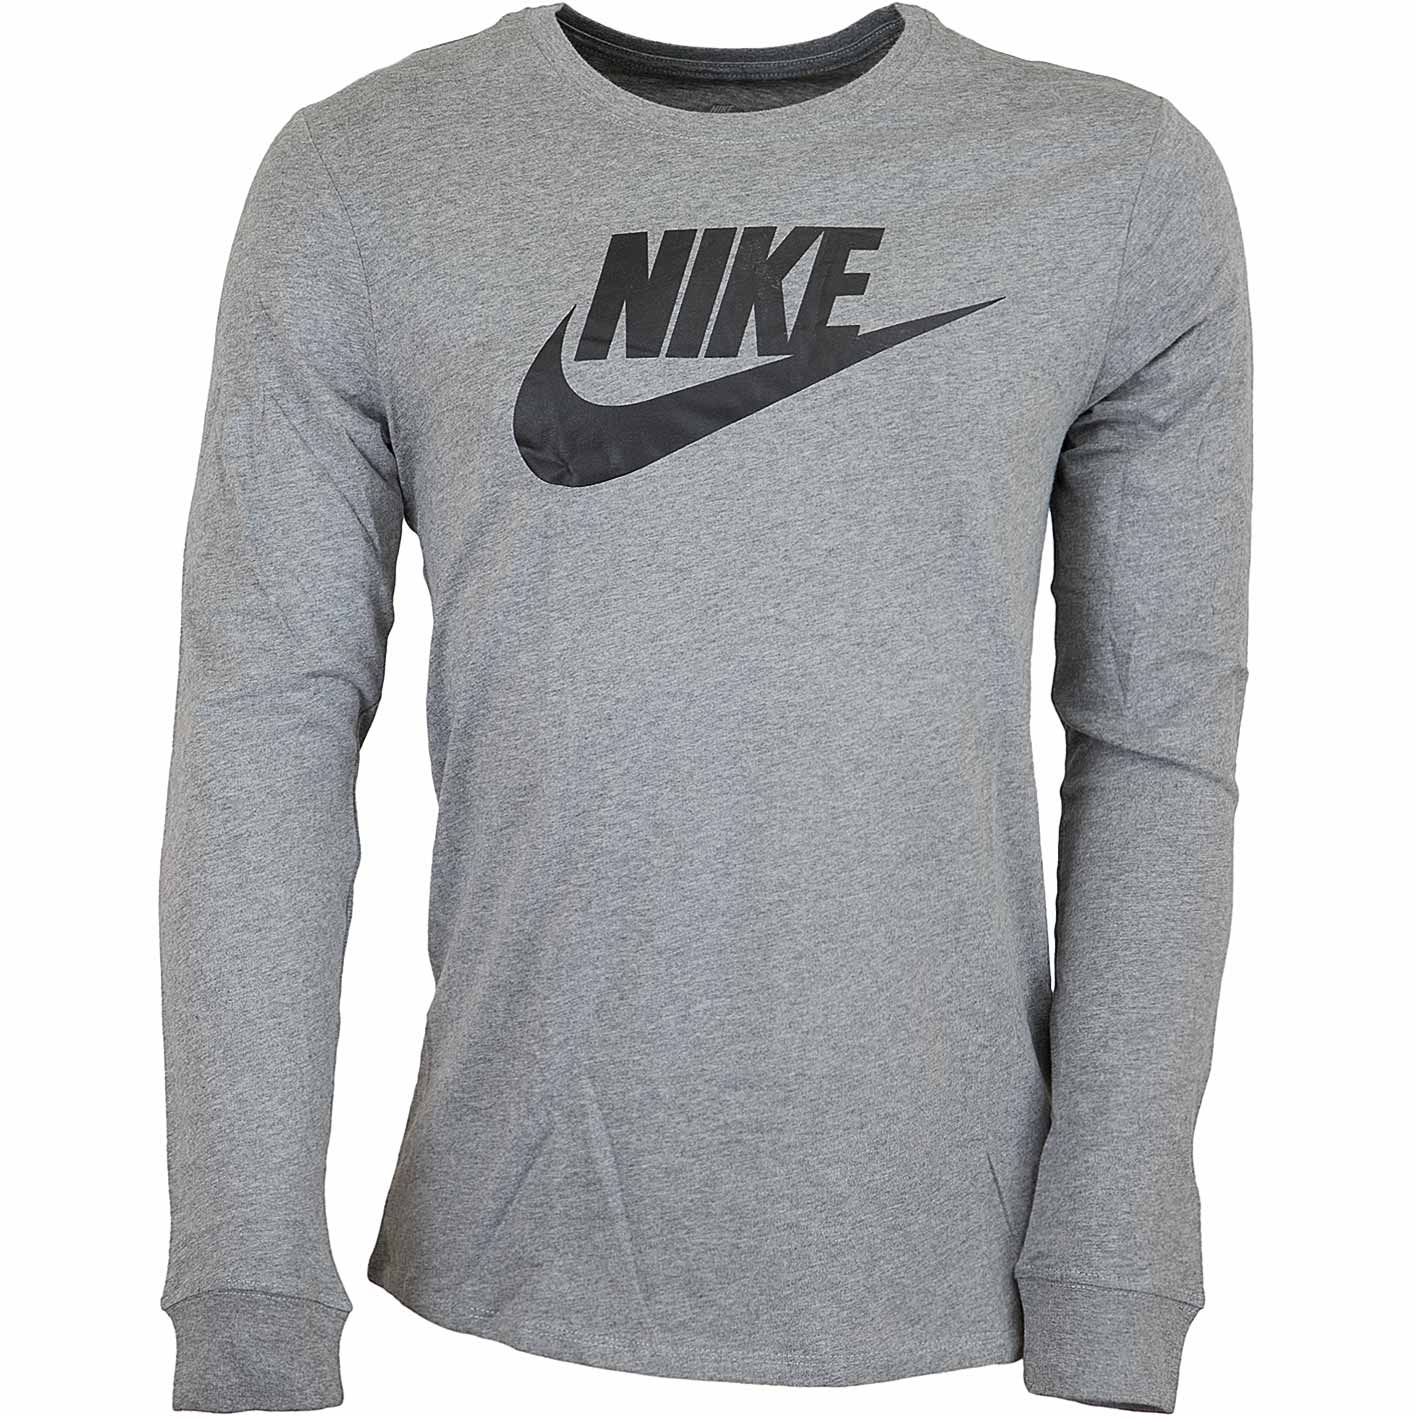 ☆ Nike Longshirt Futura Icon grau/schwarz - hier bestellen!